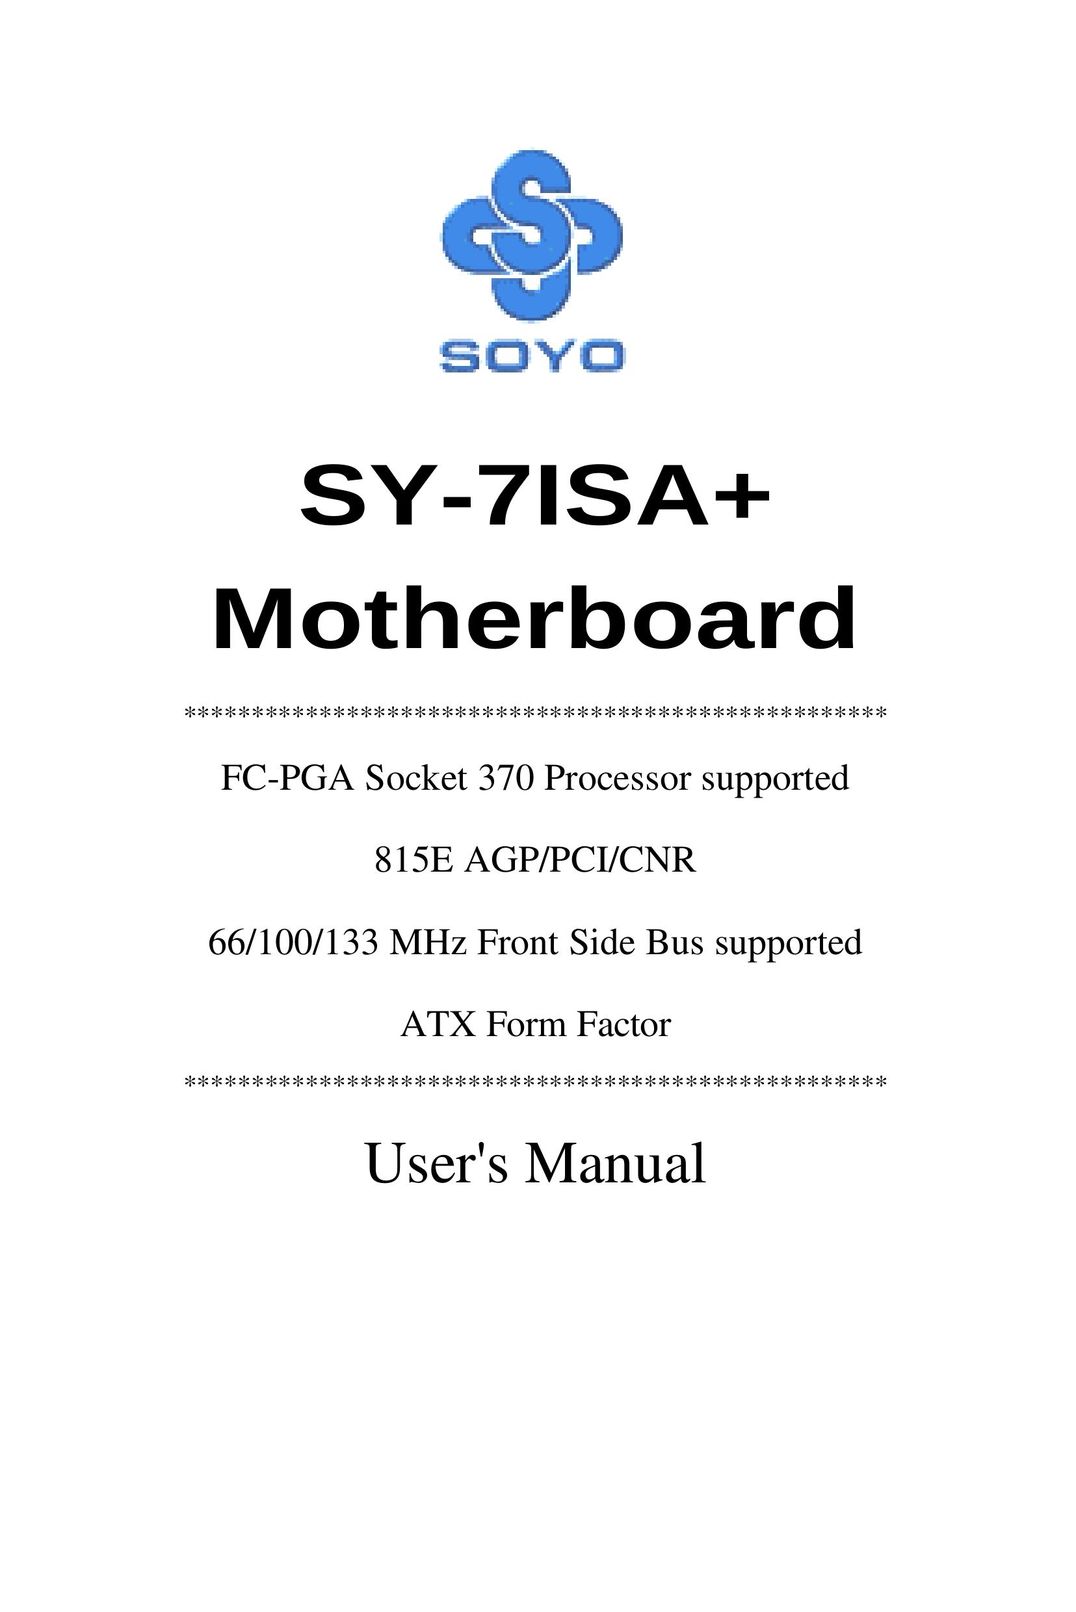 SOYO SY-7ISA+ Motherboard Computer Hardware User Manual